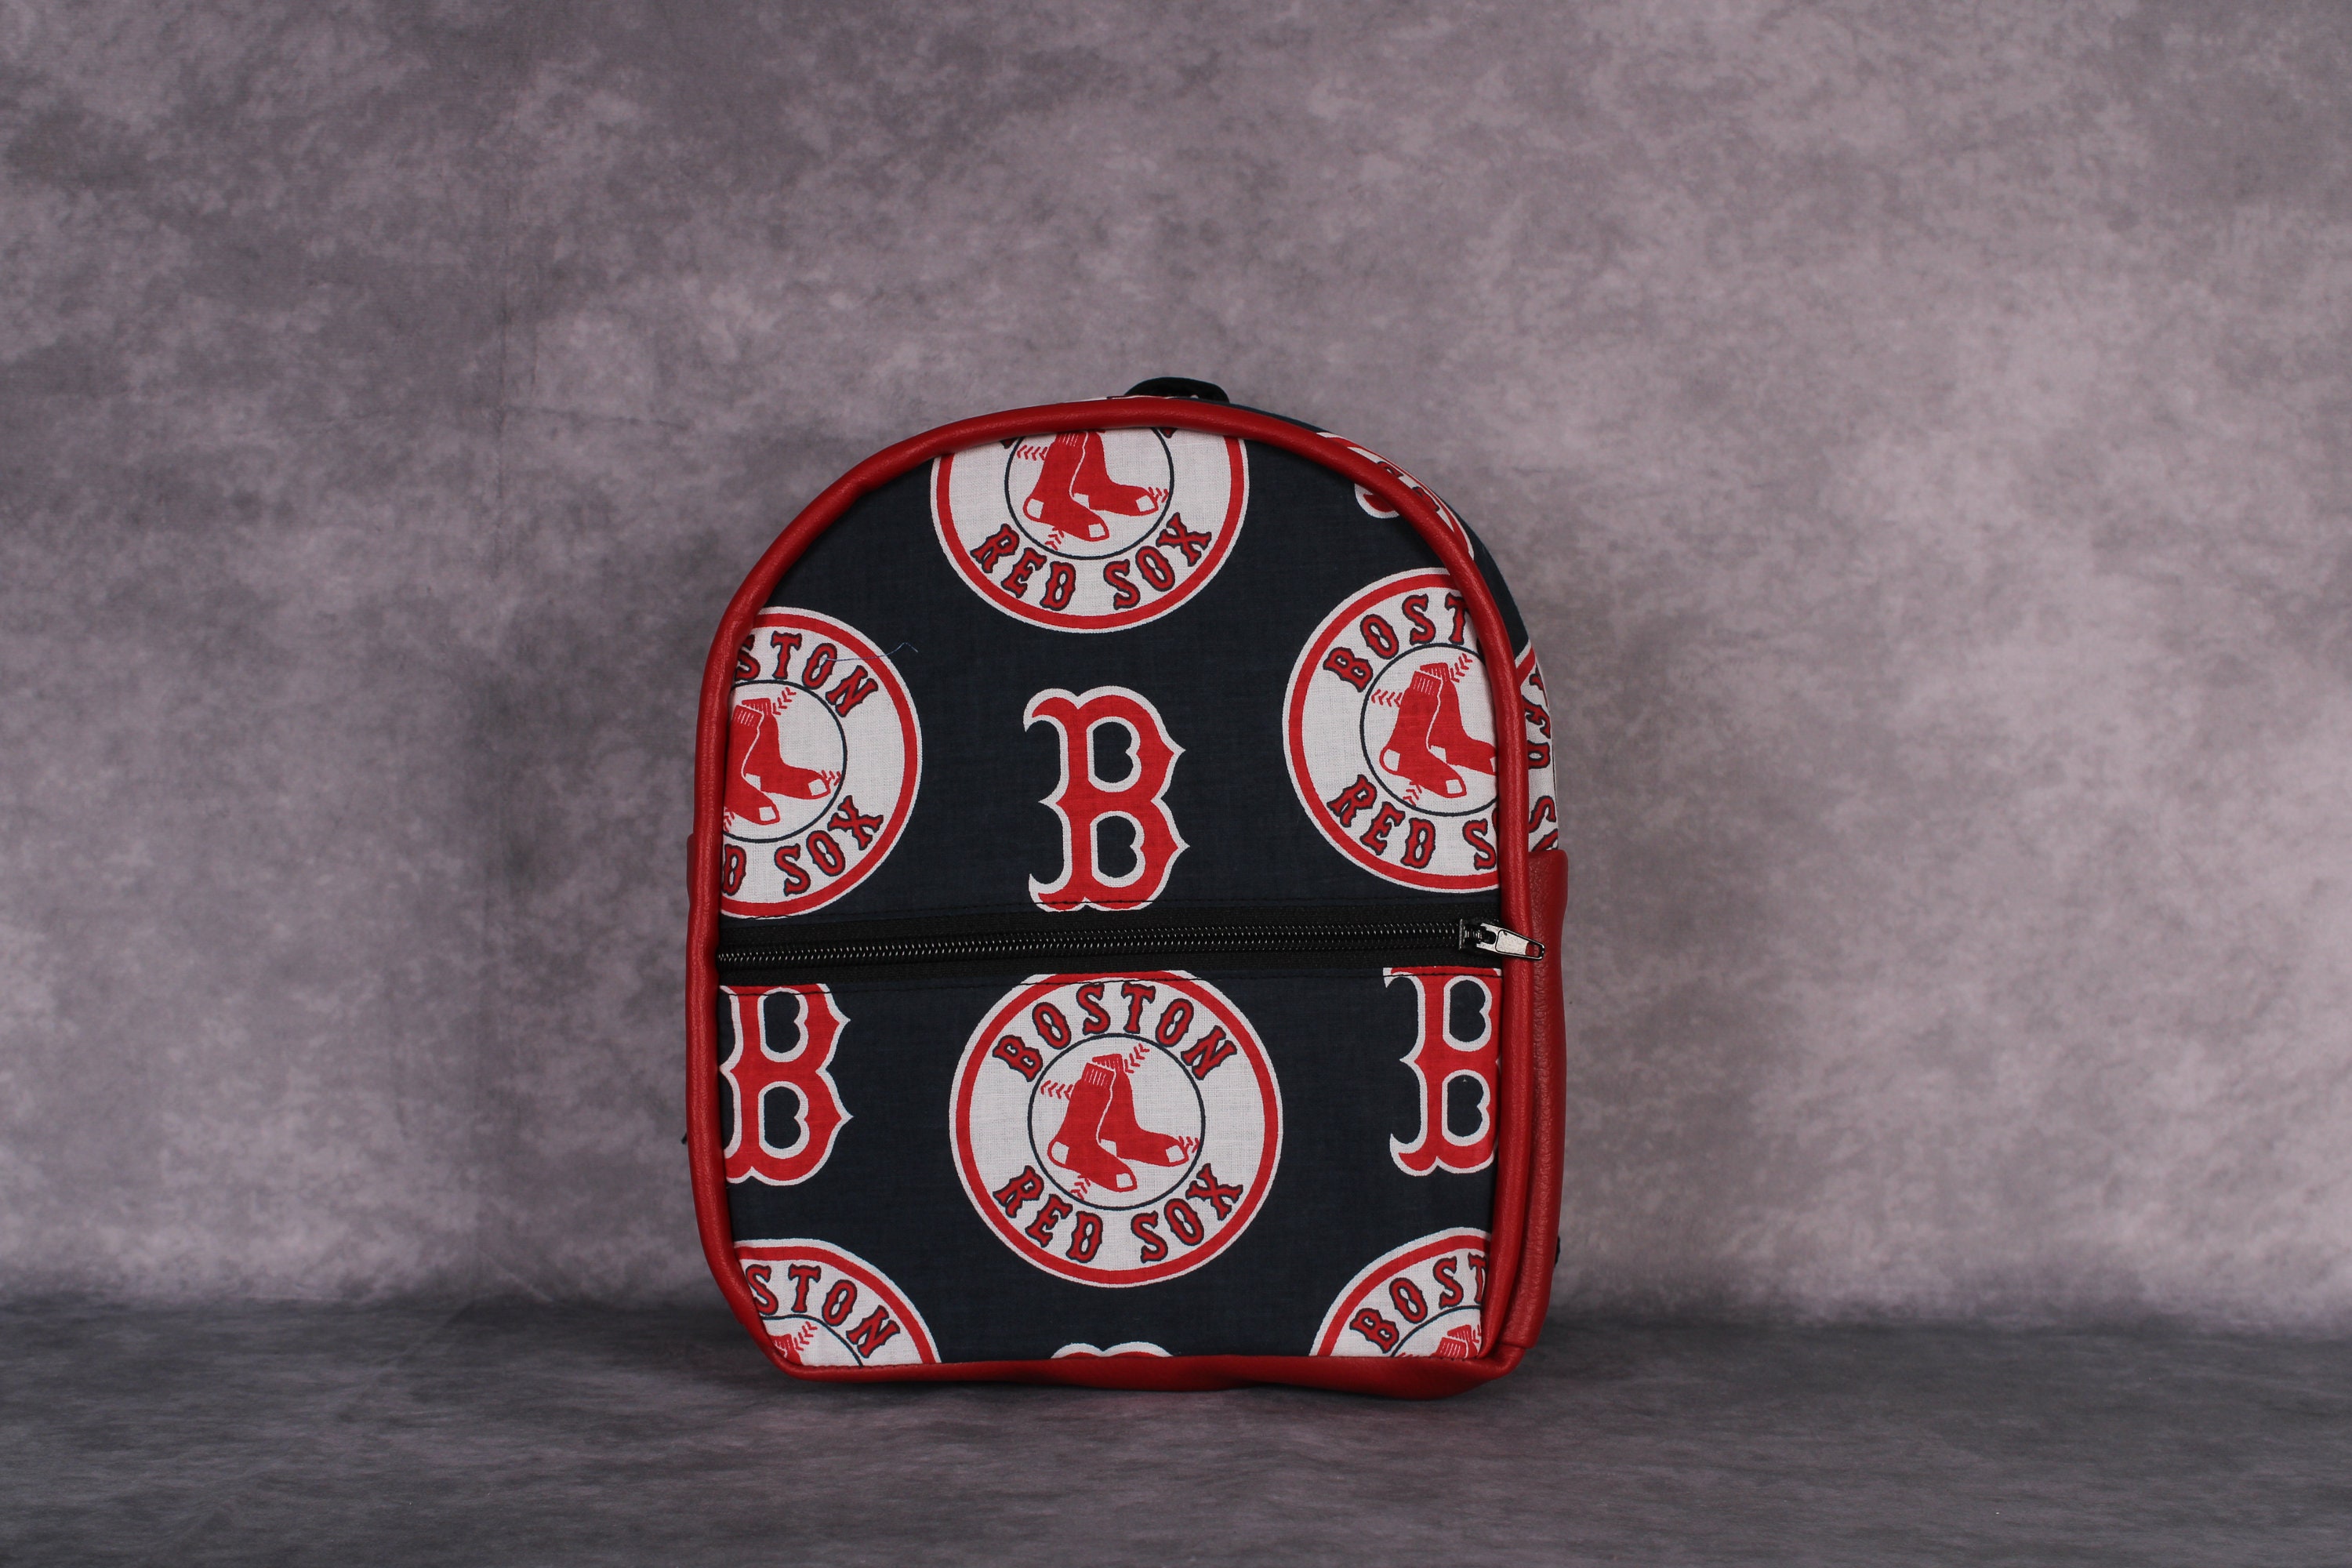 Arizona Cardinals Bags - Clear Cinch Sacks - 4 For $20.00 - Backpacks/Bags